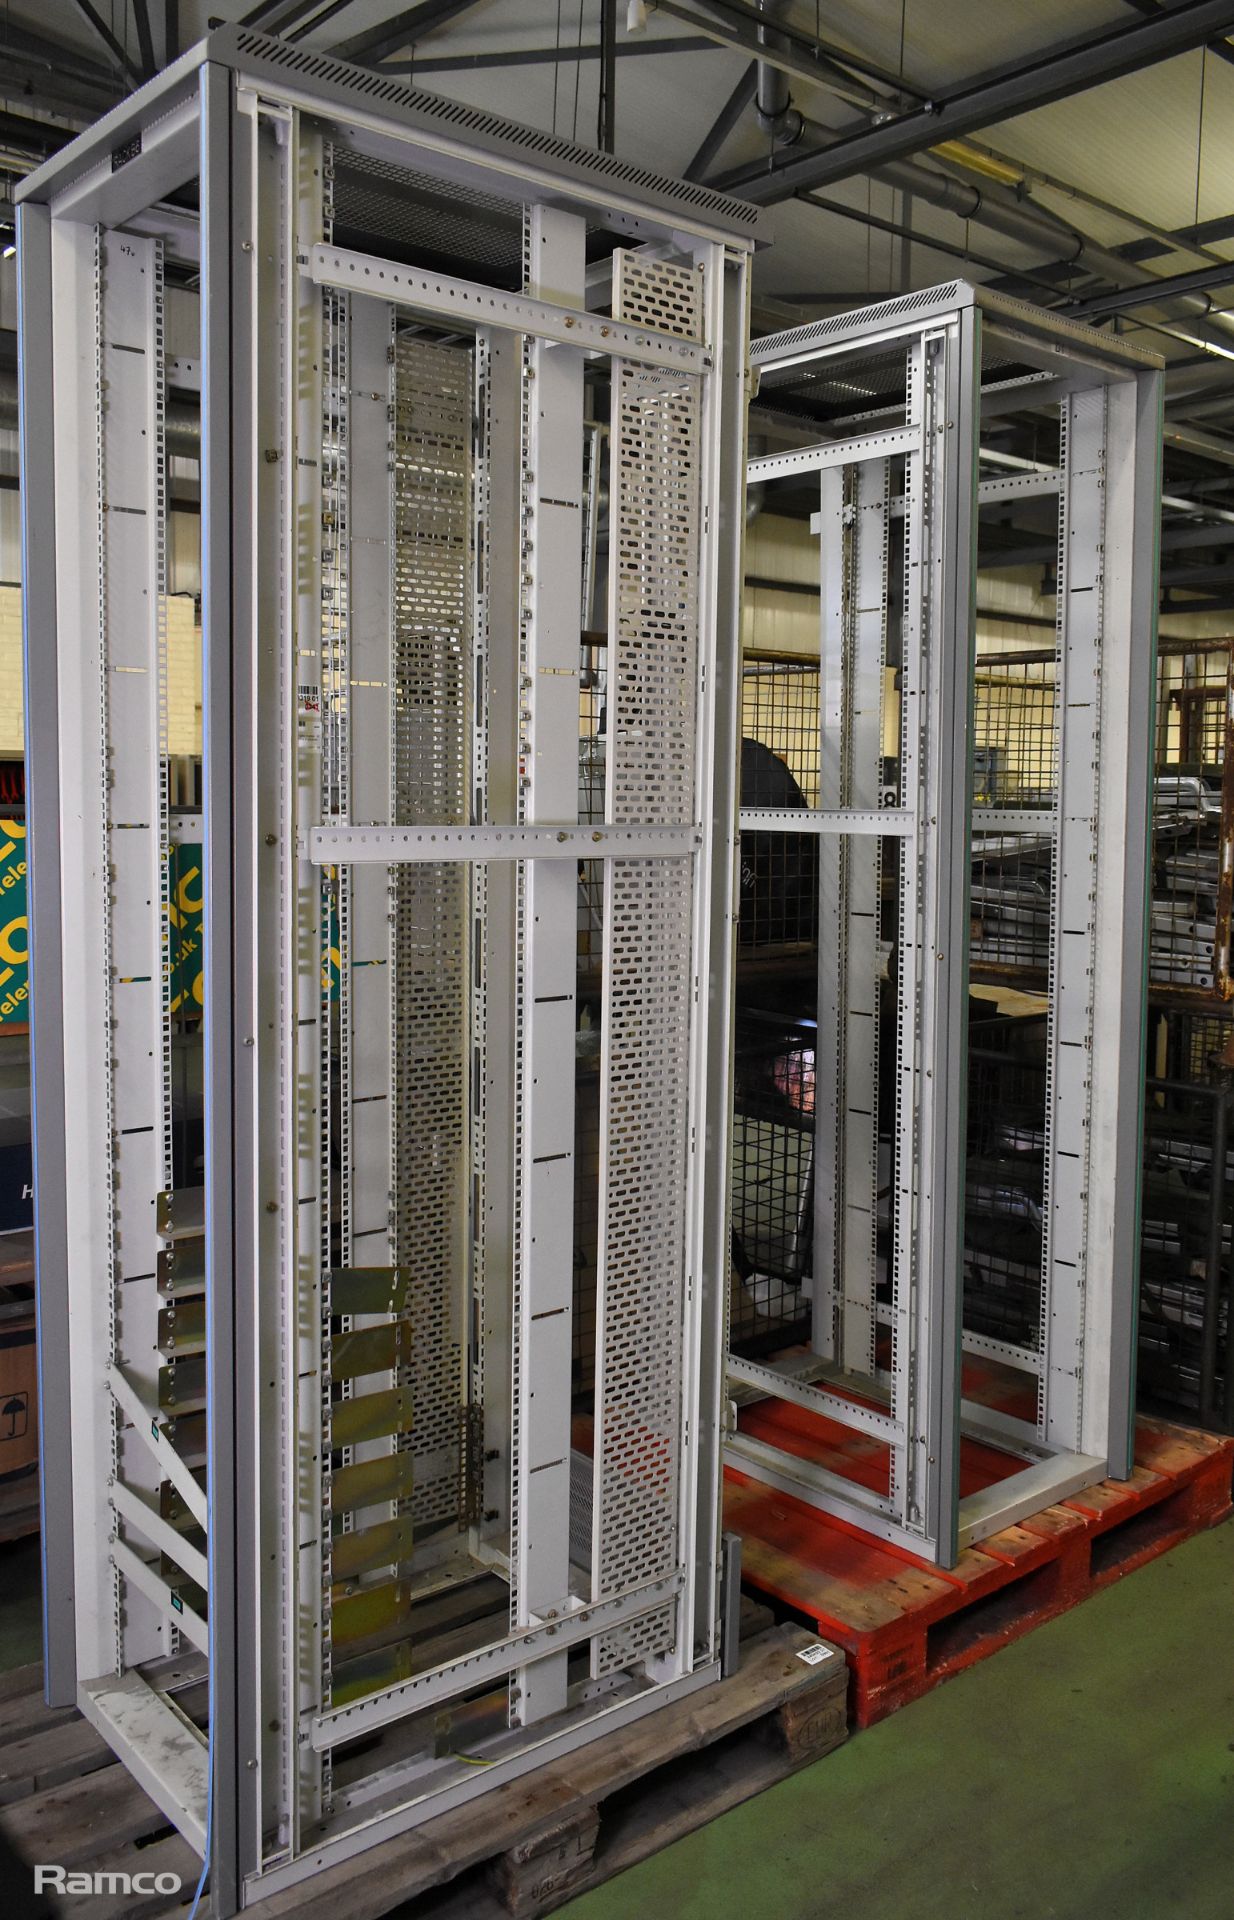 46U server rack chassis - W 590 x D 870 x H 2200mm, 46U server rack chassis - W 590 x D 870 x H 2200